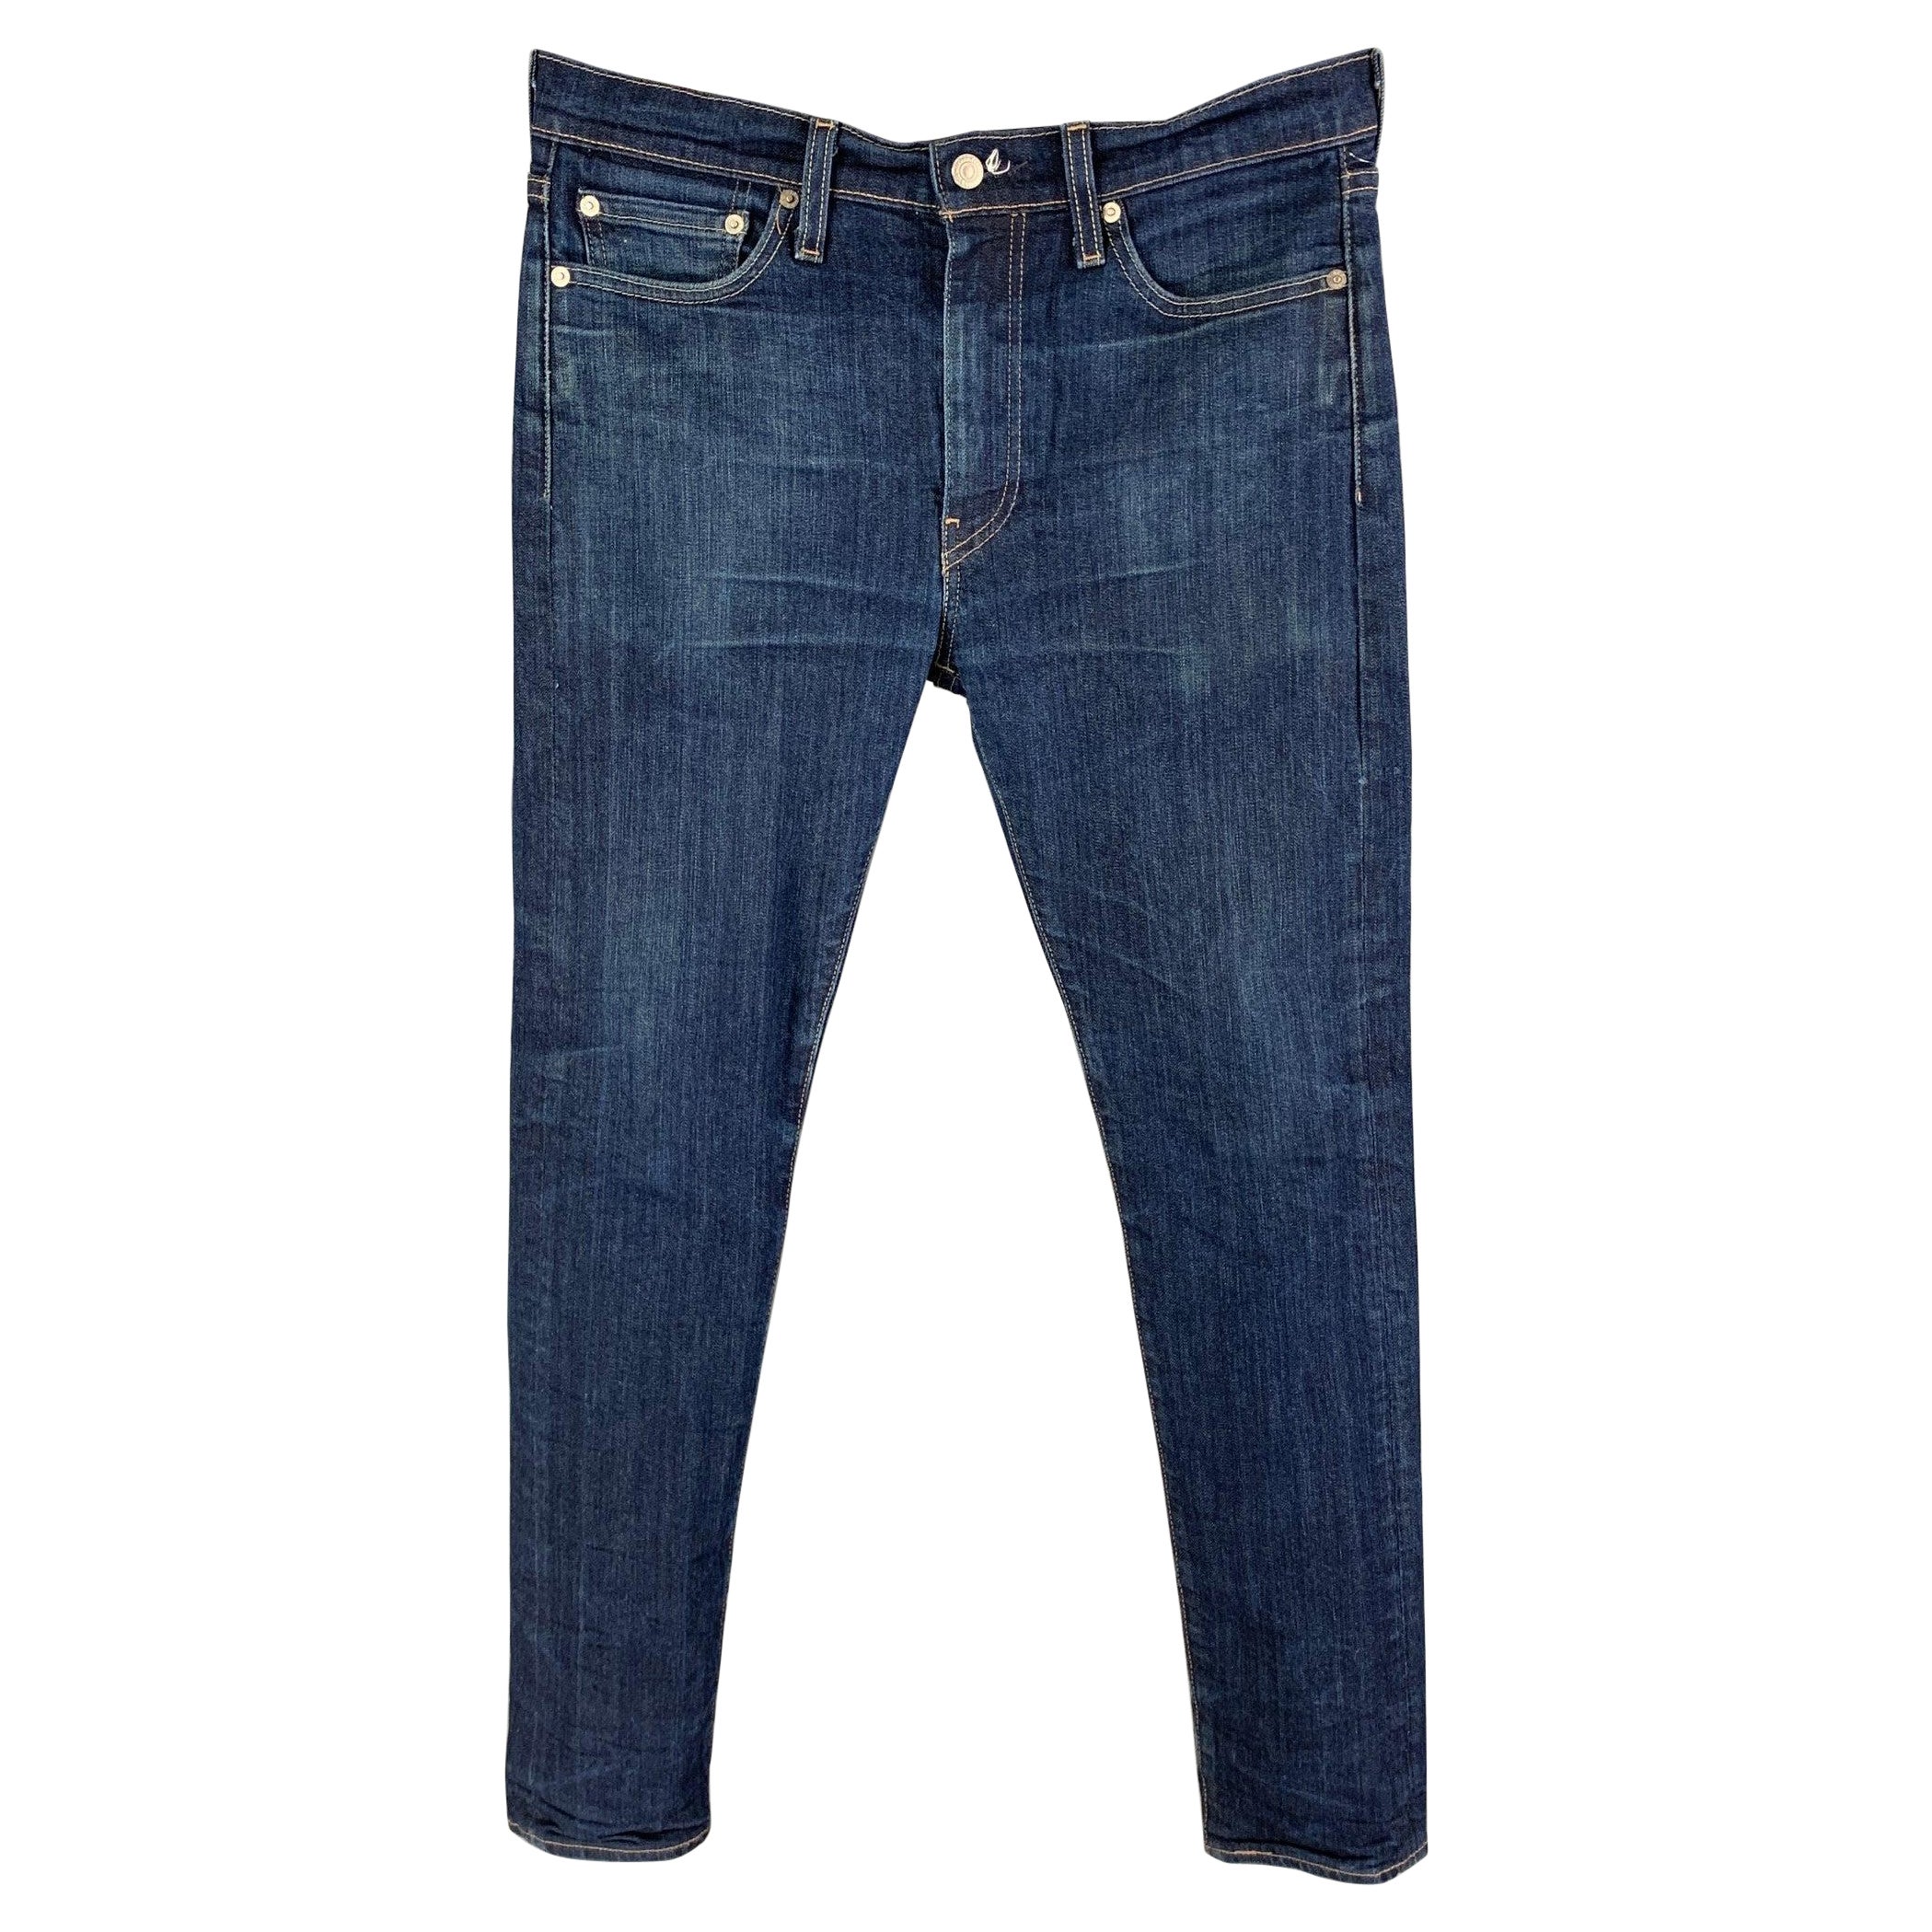 LEVI'S Size 33 Blue Washed Cotton Slim Jeans For Sale